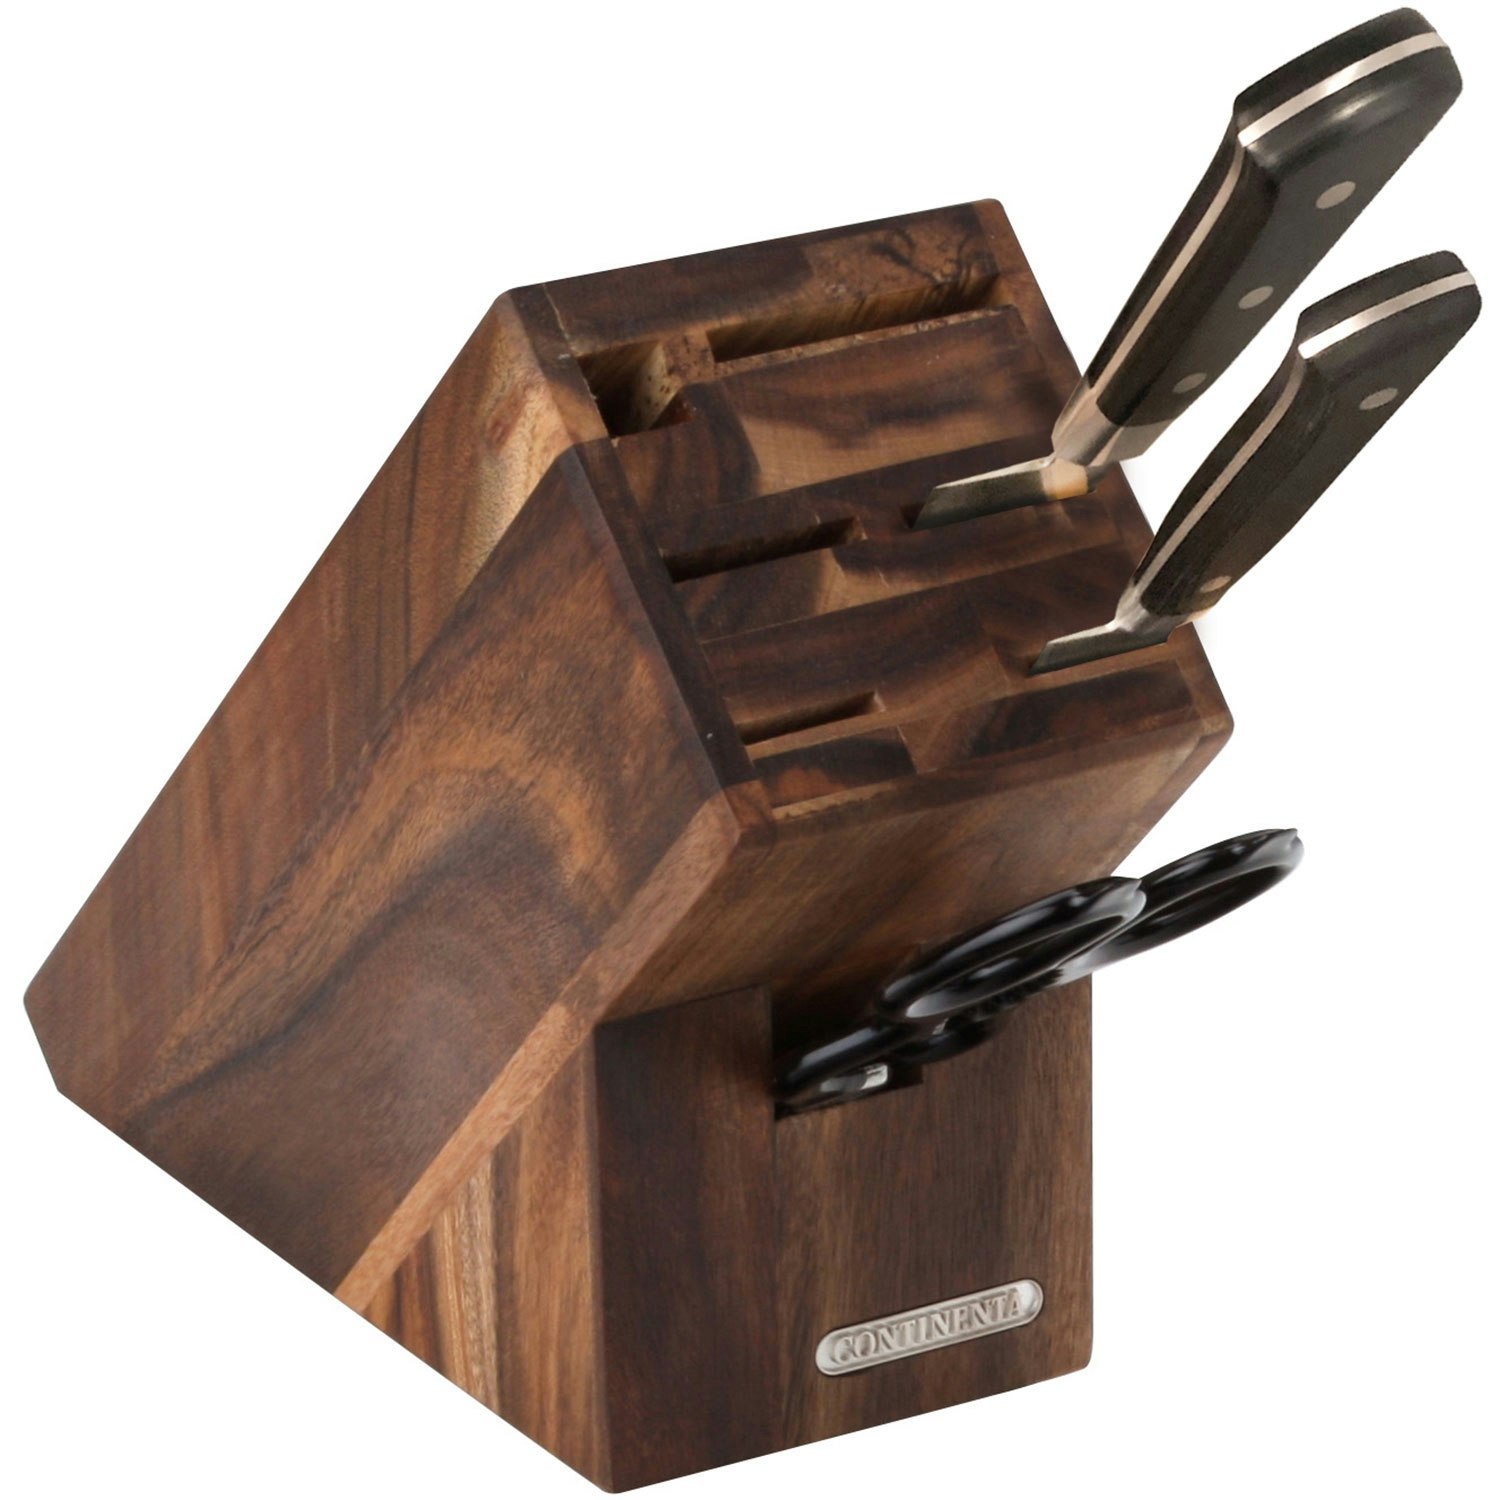 https://royaldesign.com/image/2/continenta-knife-block-in-acacia-for-5-knives-brow-scissor-1